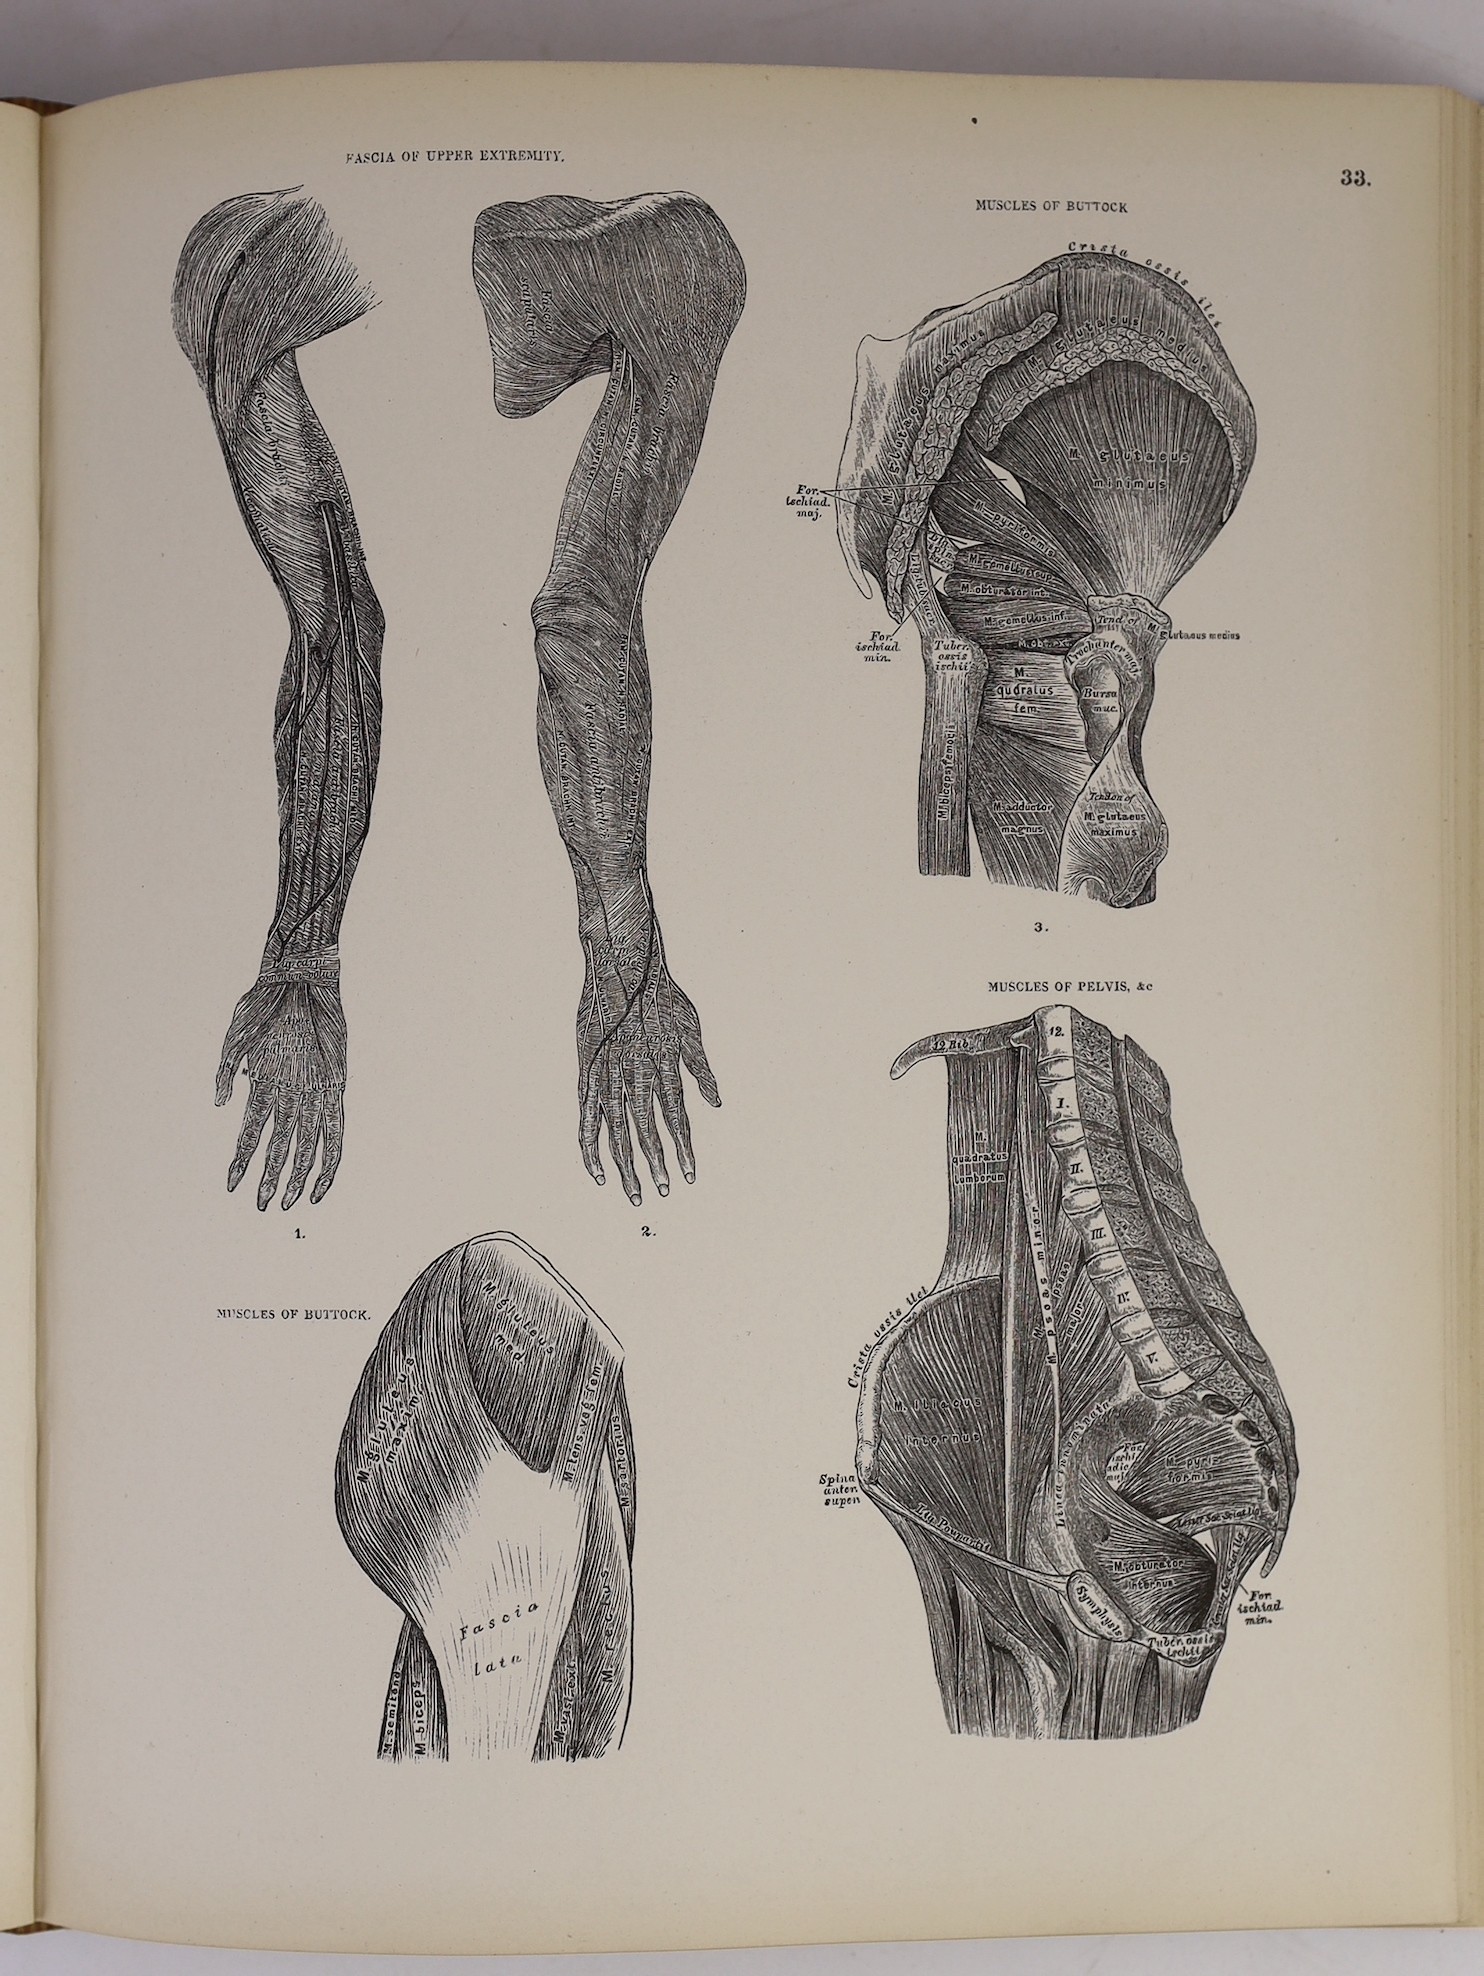 Smith, Noble - The Descriptive Atlas of Anatomy, 4to, cloth, with 92 plates, Smith, Elder & Co., London, 1880